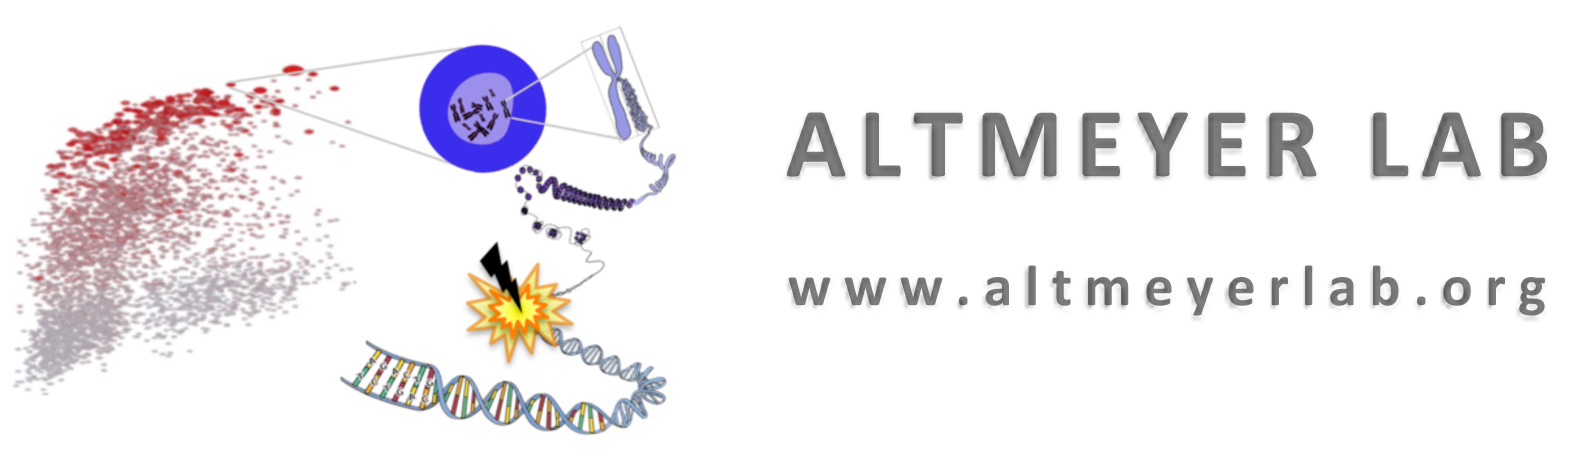 Altmeyer Lab Website